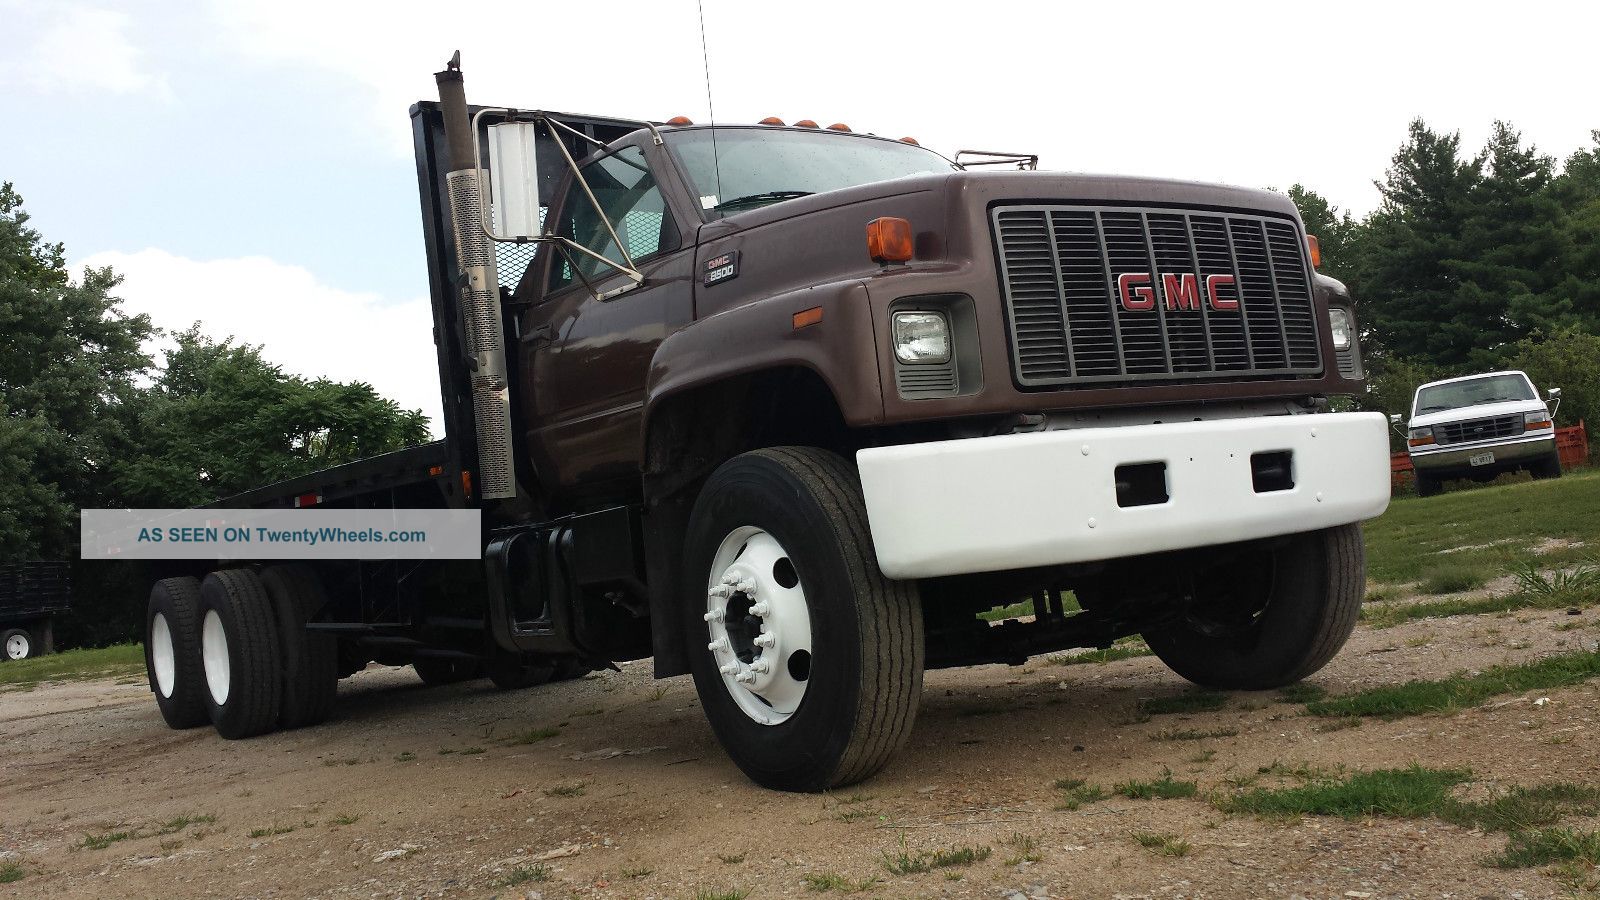 Gmc heavy duty trucks #5